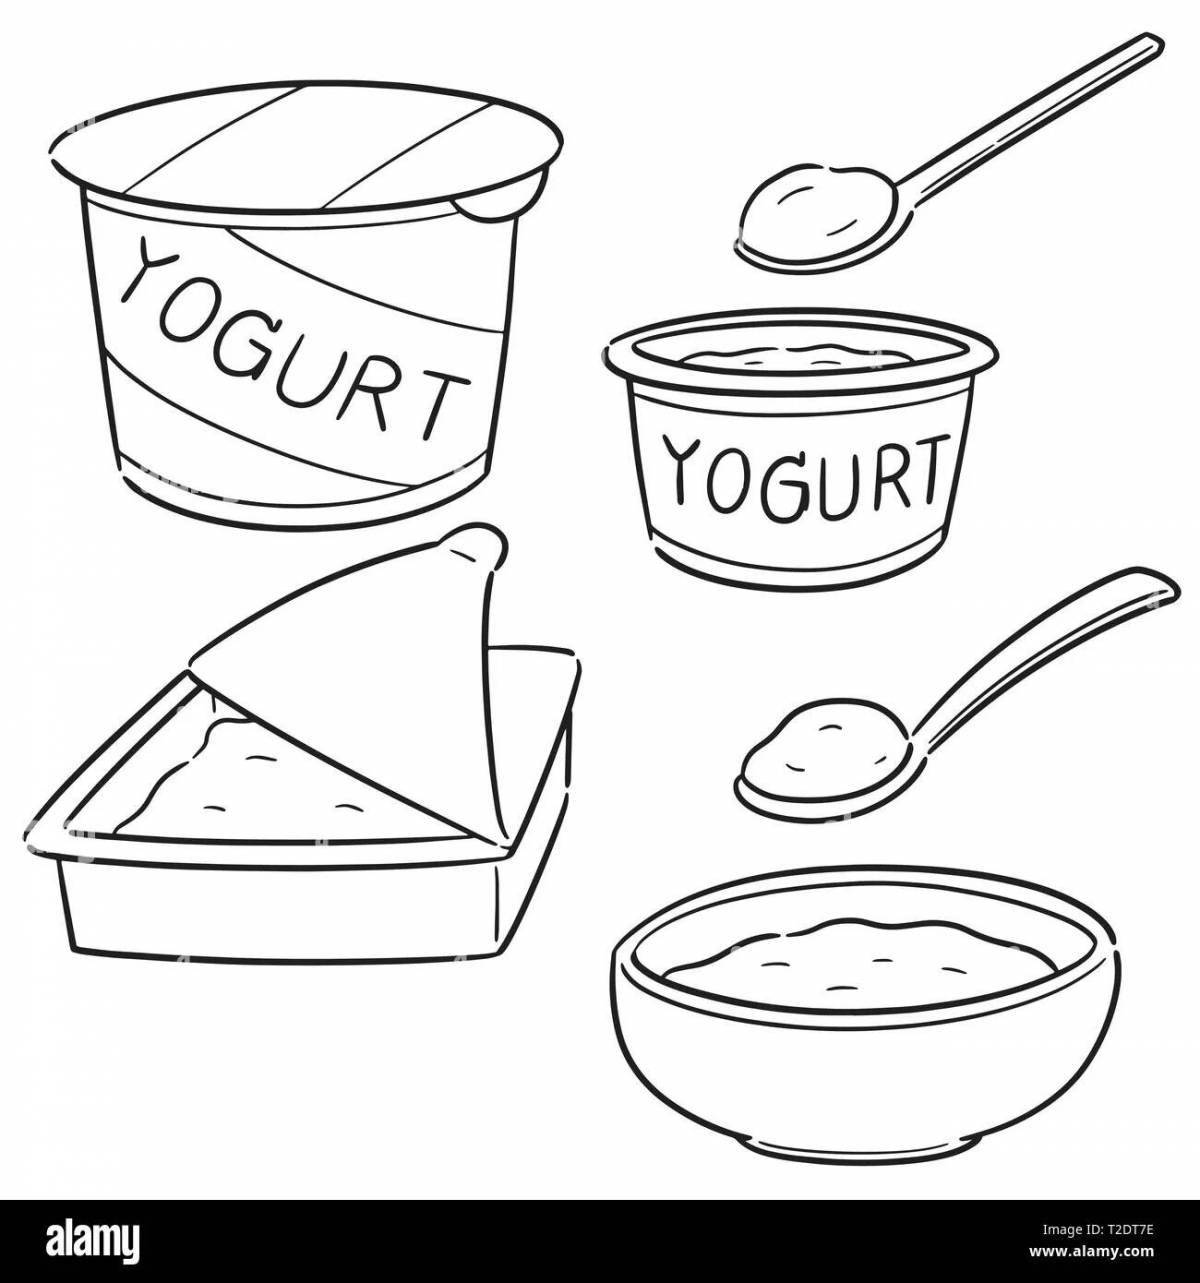 Crazy color yogurt coloring pages for kids